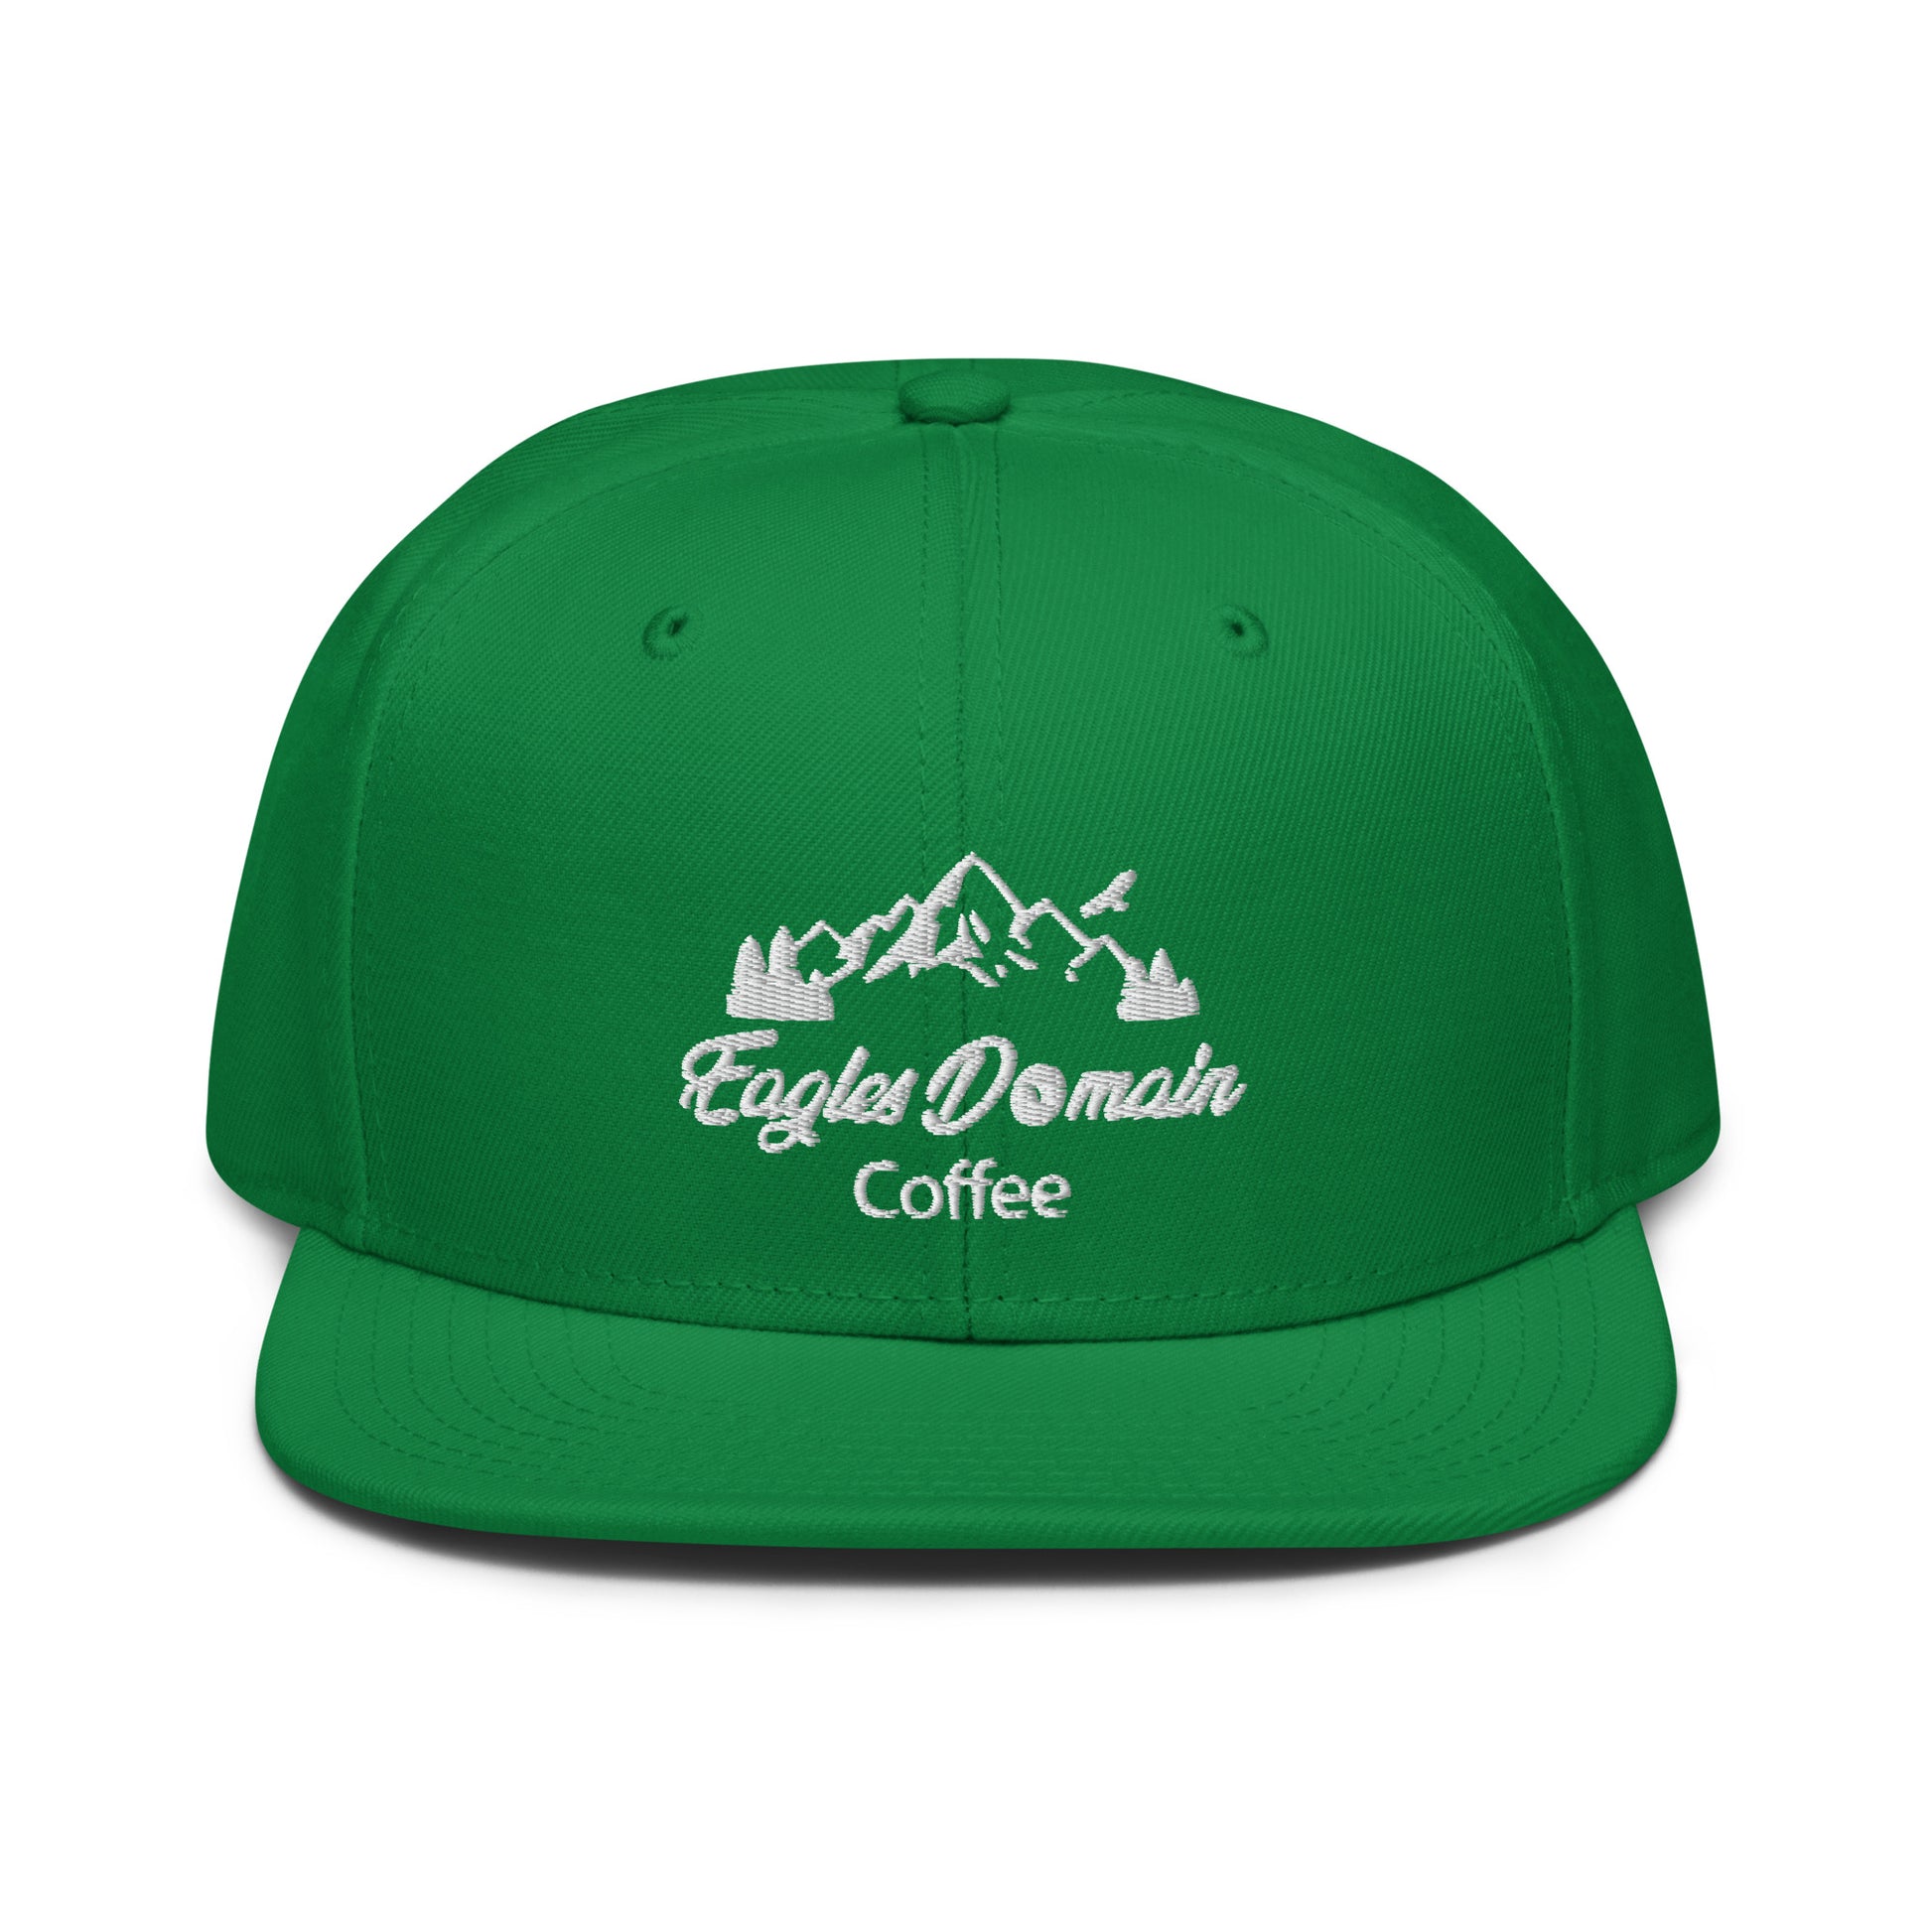 Eagles Domain Coffee Snapback Otto Hat - Eagles Domain Coffee